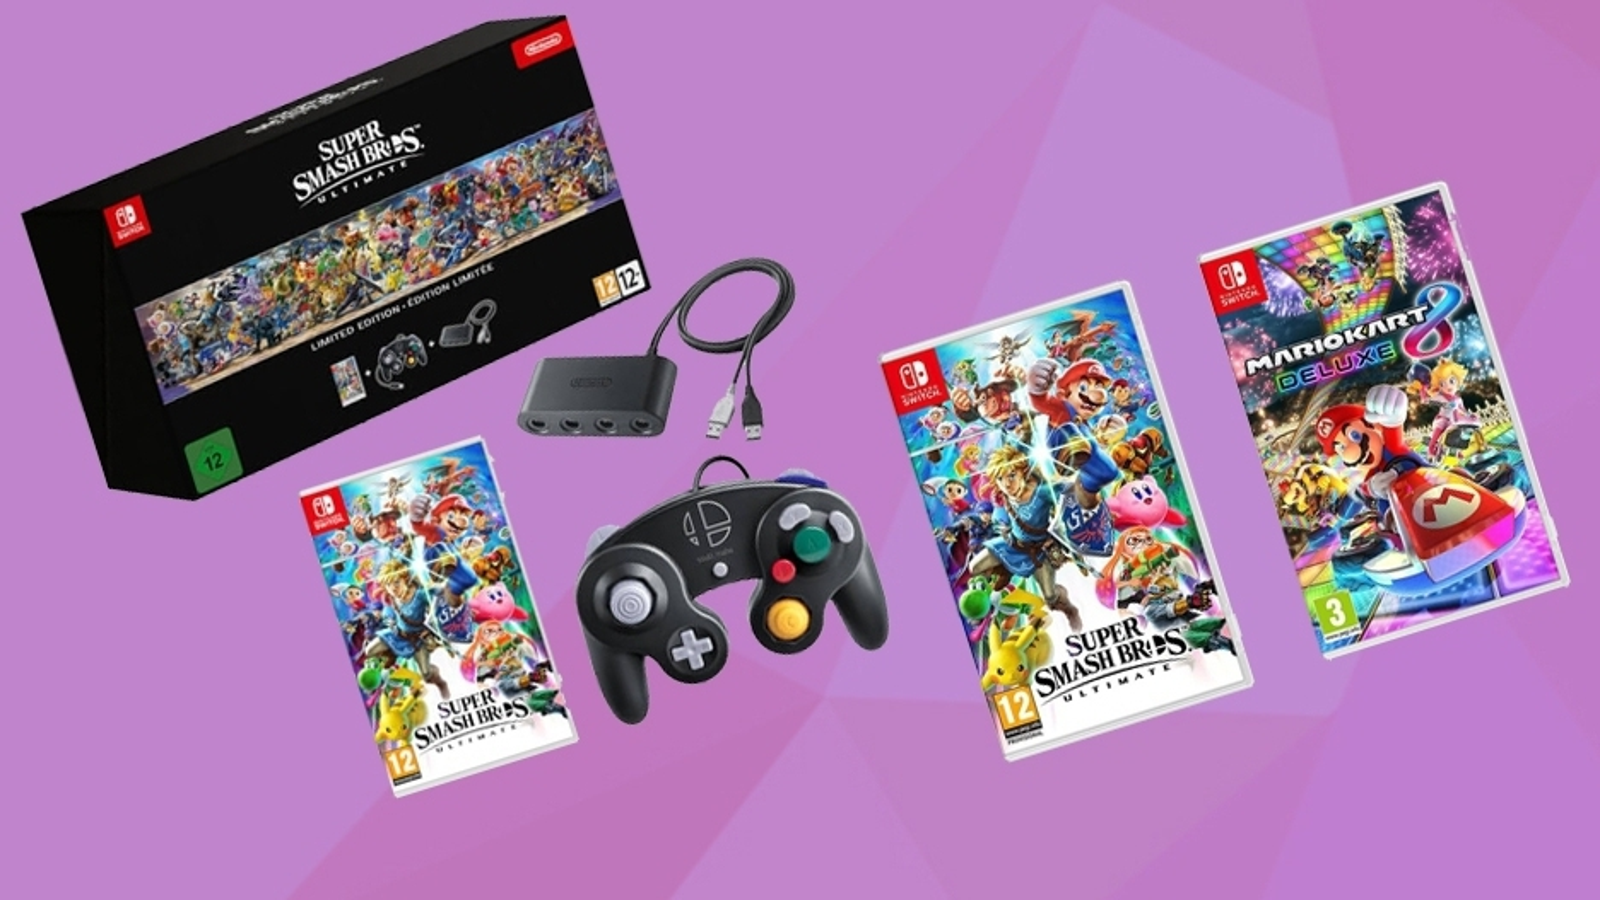 Super Smash Bros. Ultimate Special Edition, Nintendo Switch